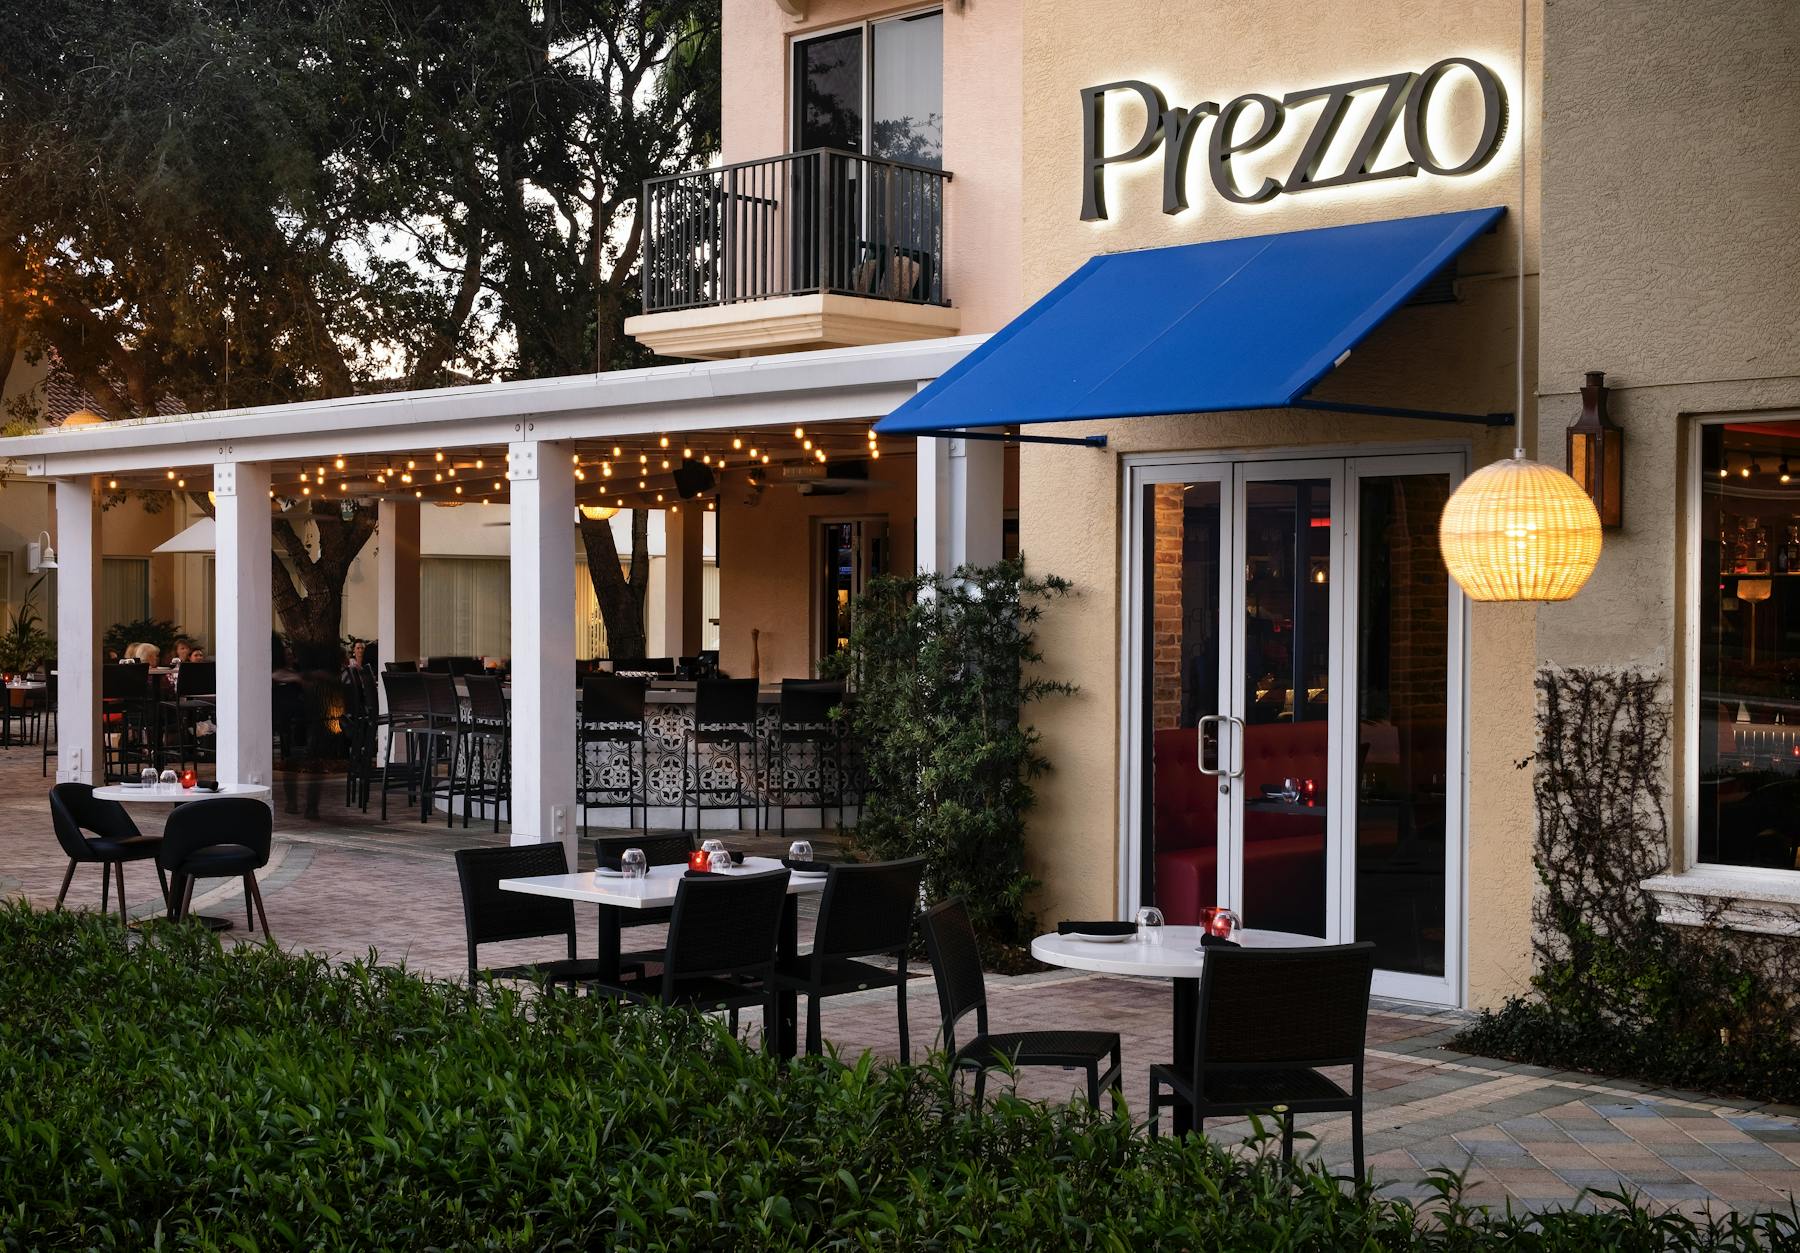 MEZZO MARINAIO - Via Aurelia 8, Celle Ligure, Agrigento, Italy - Pizza -  Restaurant Reviews - Phone Number - Yelp